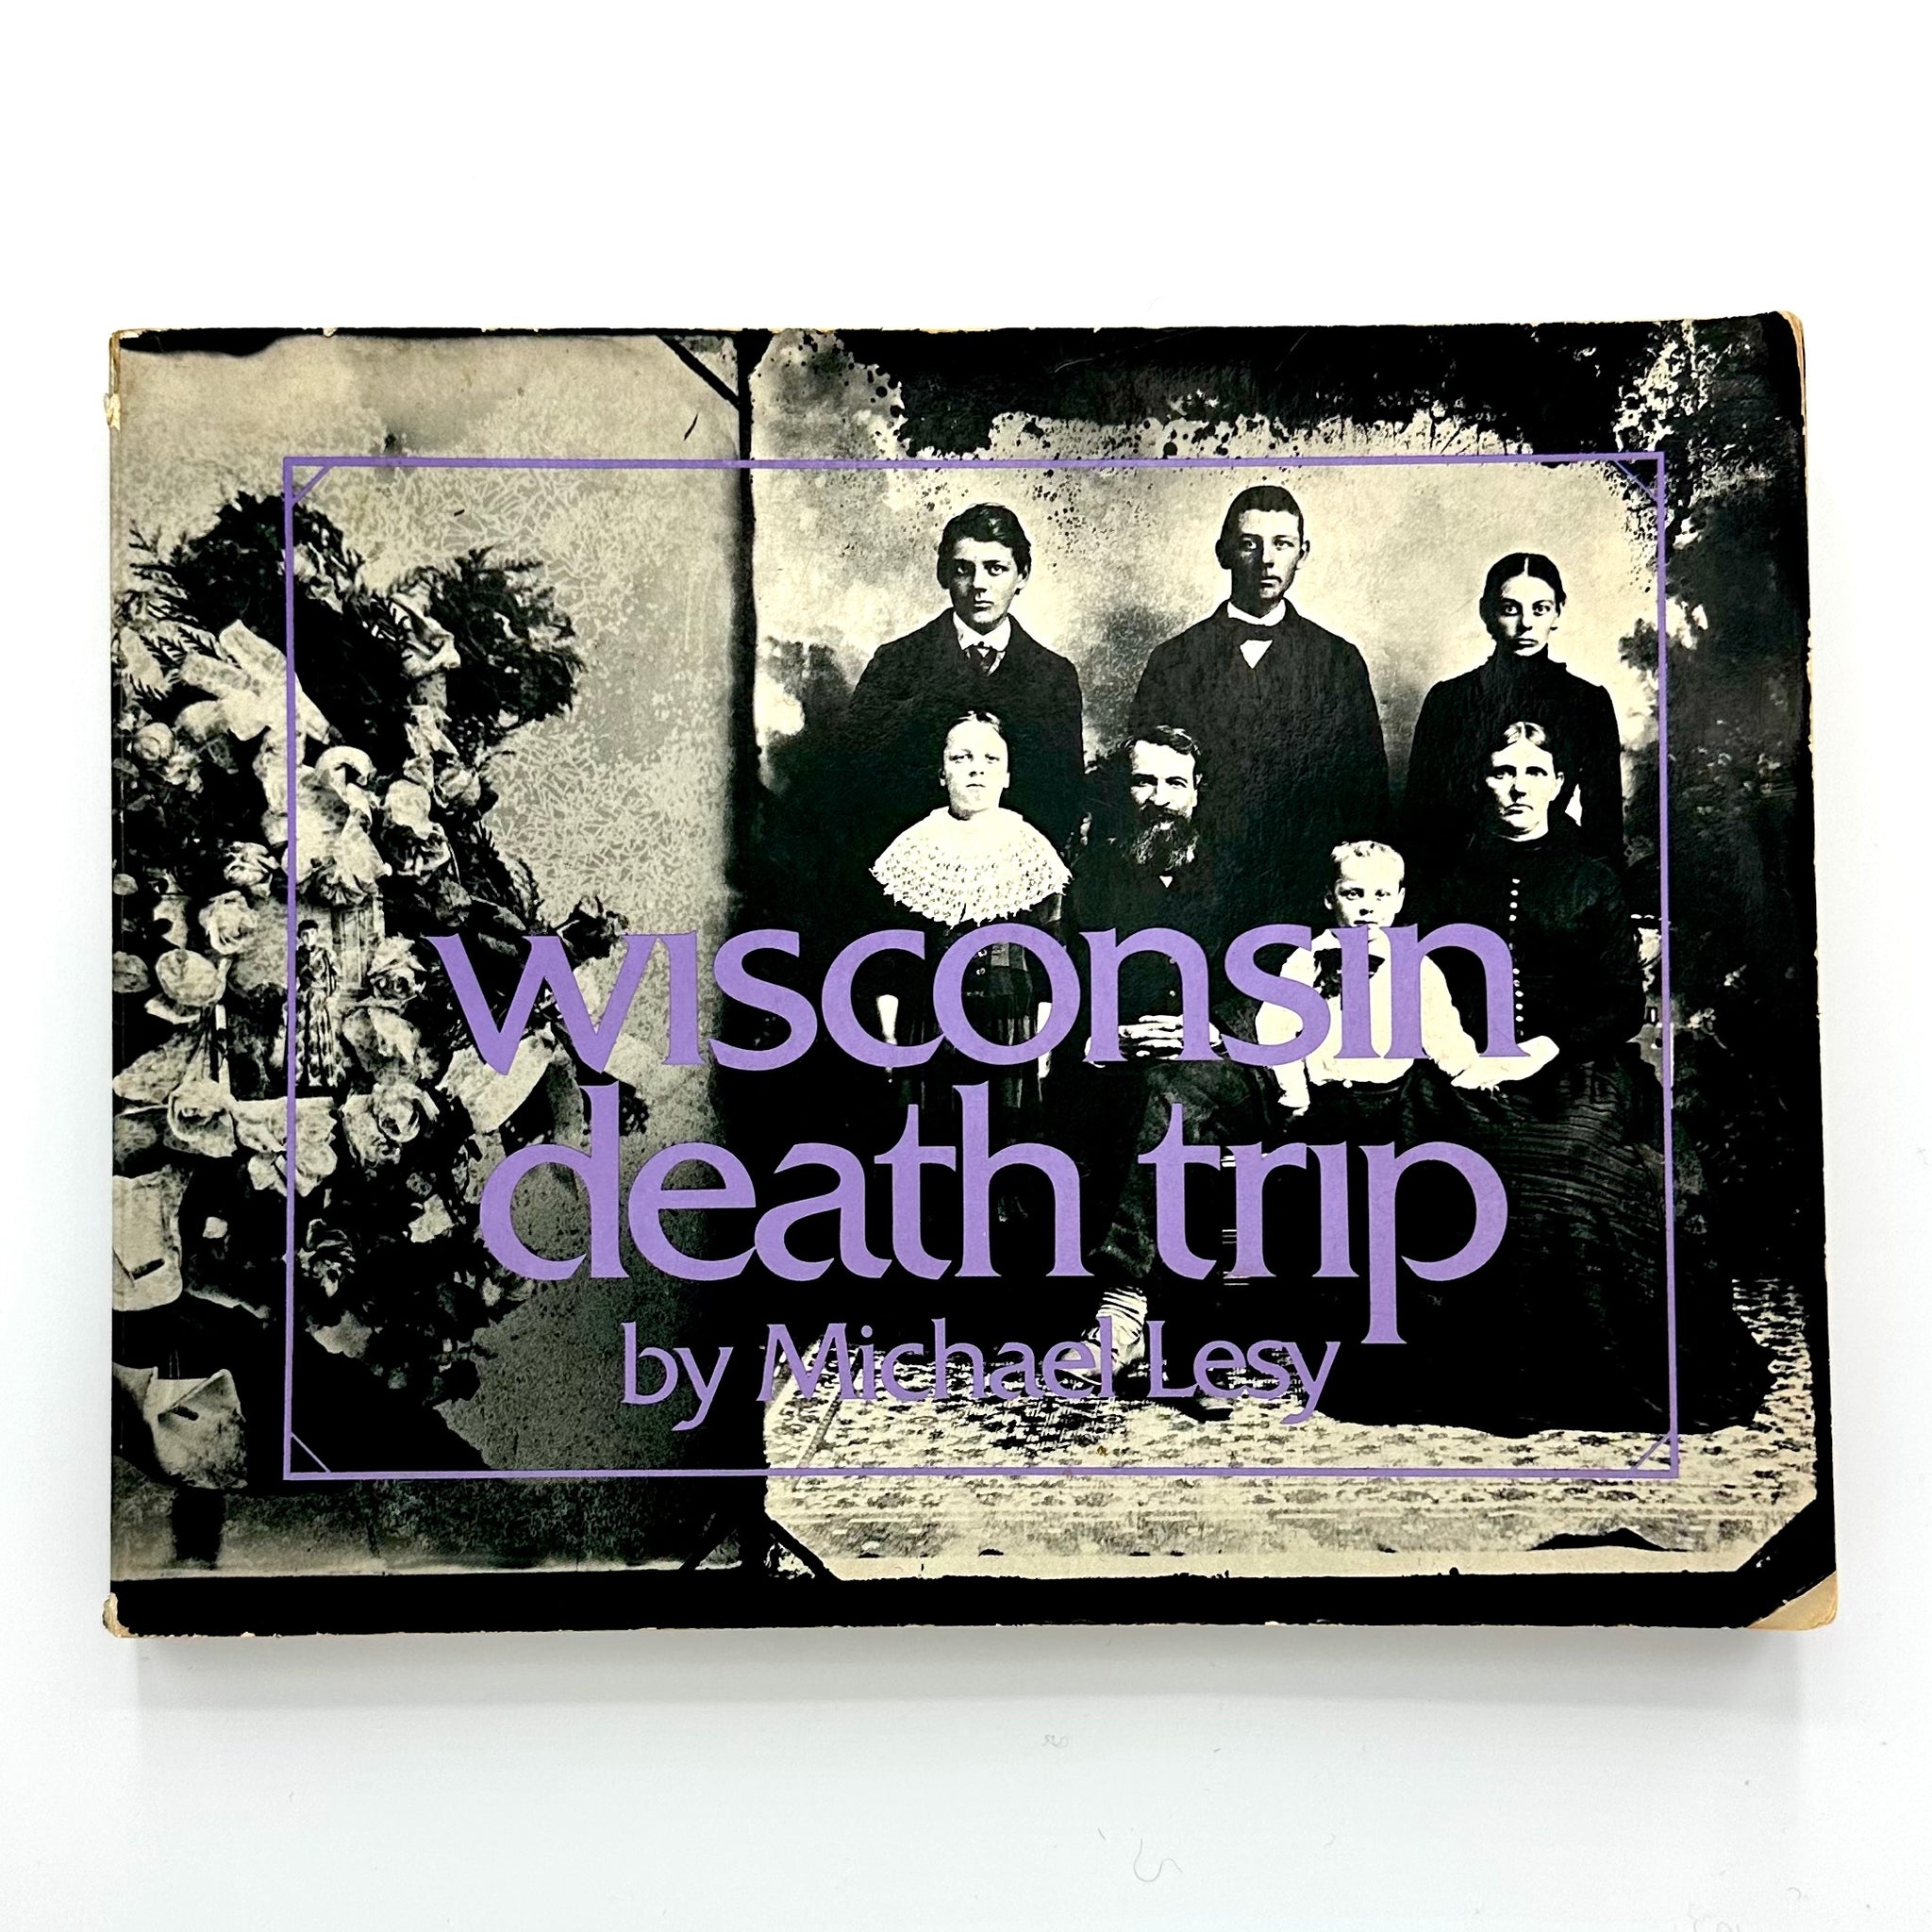 Wisconsin Death Trip — Michael Lesy